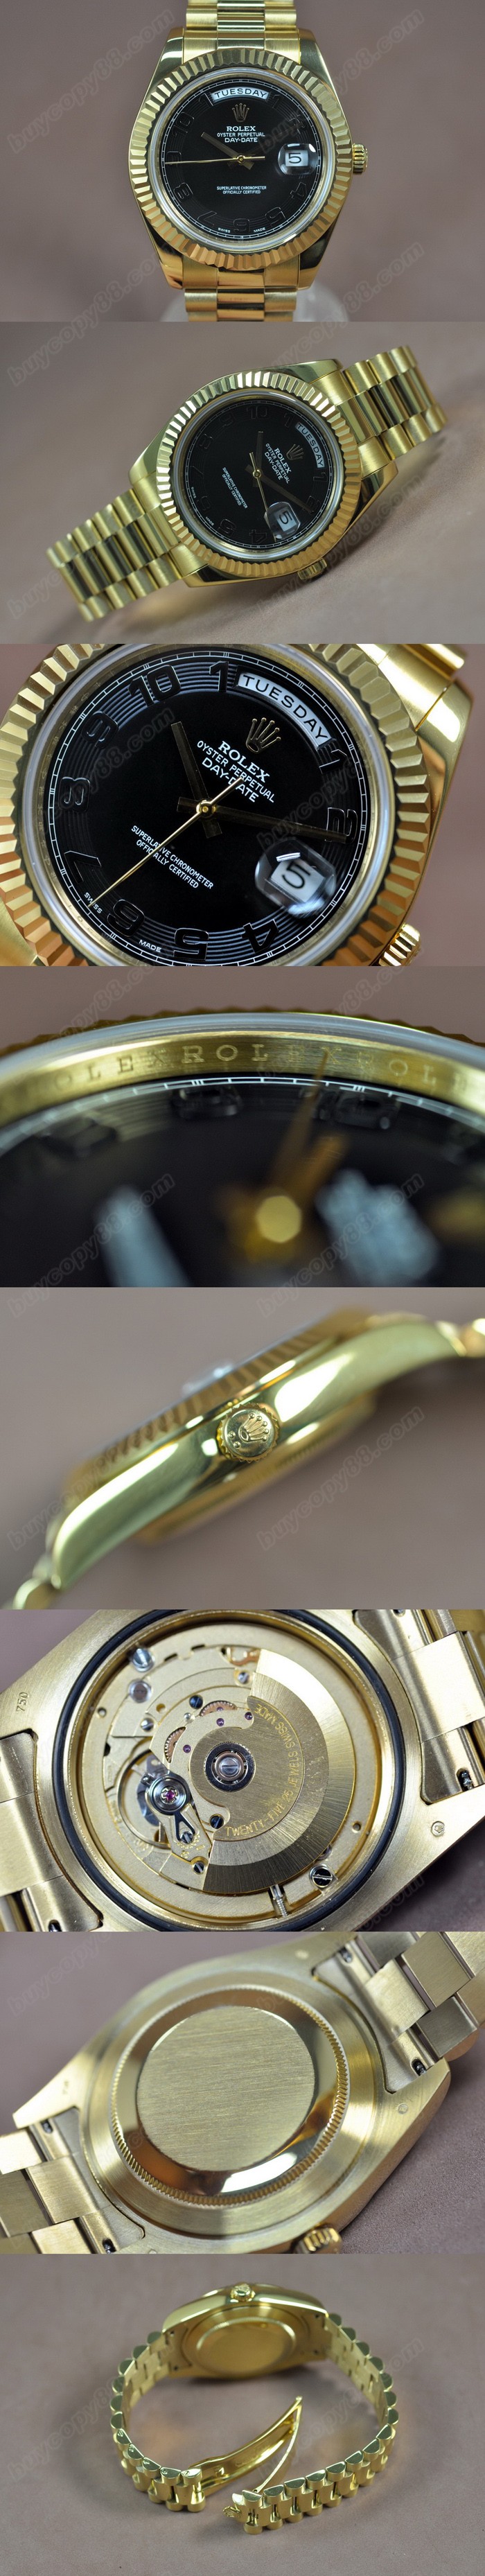 勞力士 Rolex Day Date 41mm Full Yellow Gold A2836-2 自動機芯搭載0